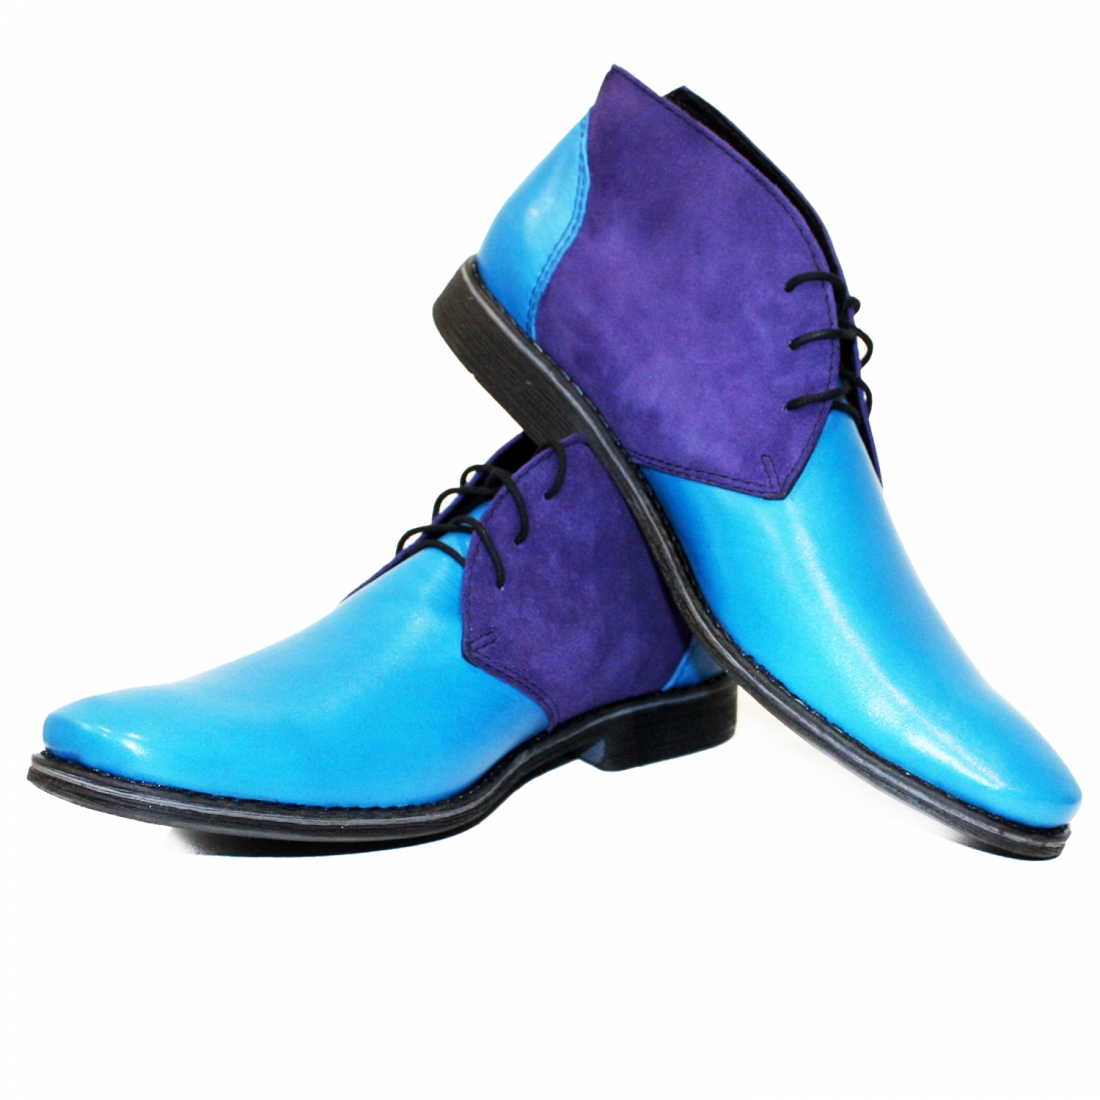 Modello Freddero - Chukka Boots - Handmade Colorful Italian Leather Shoes